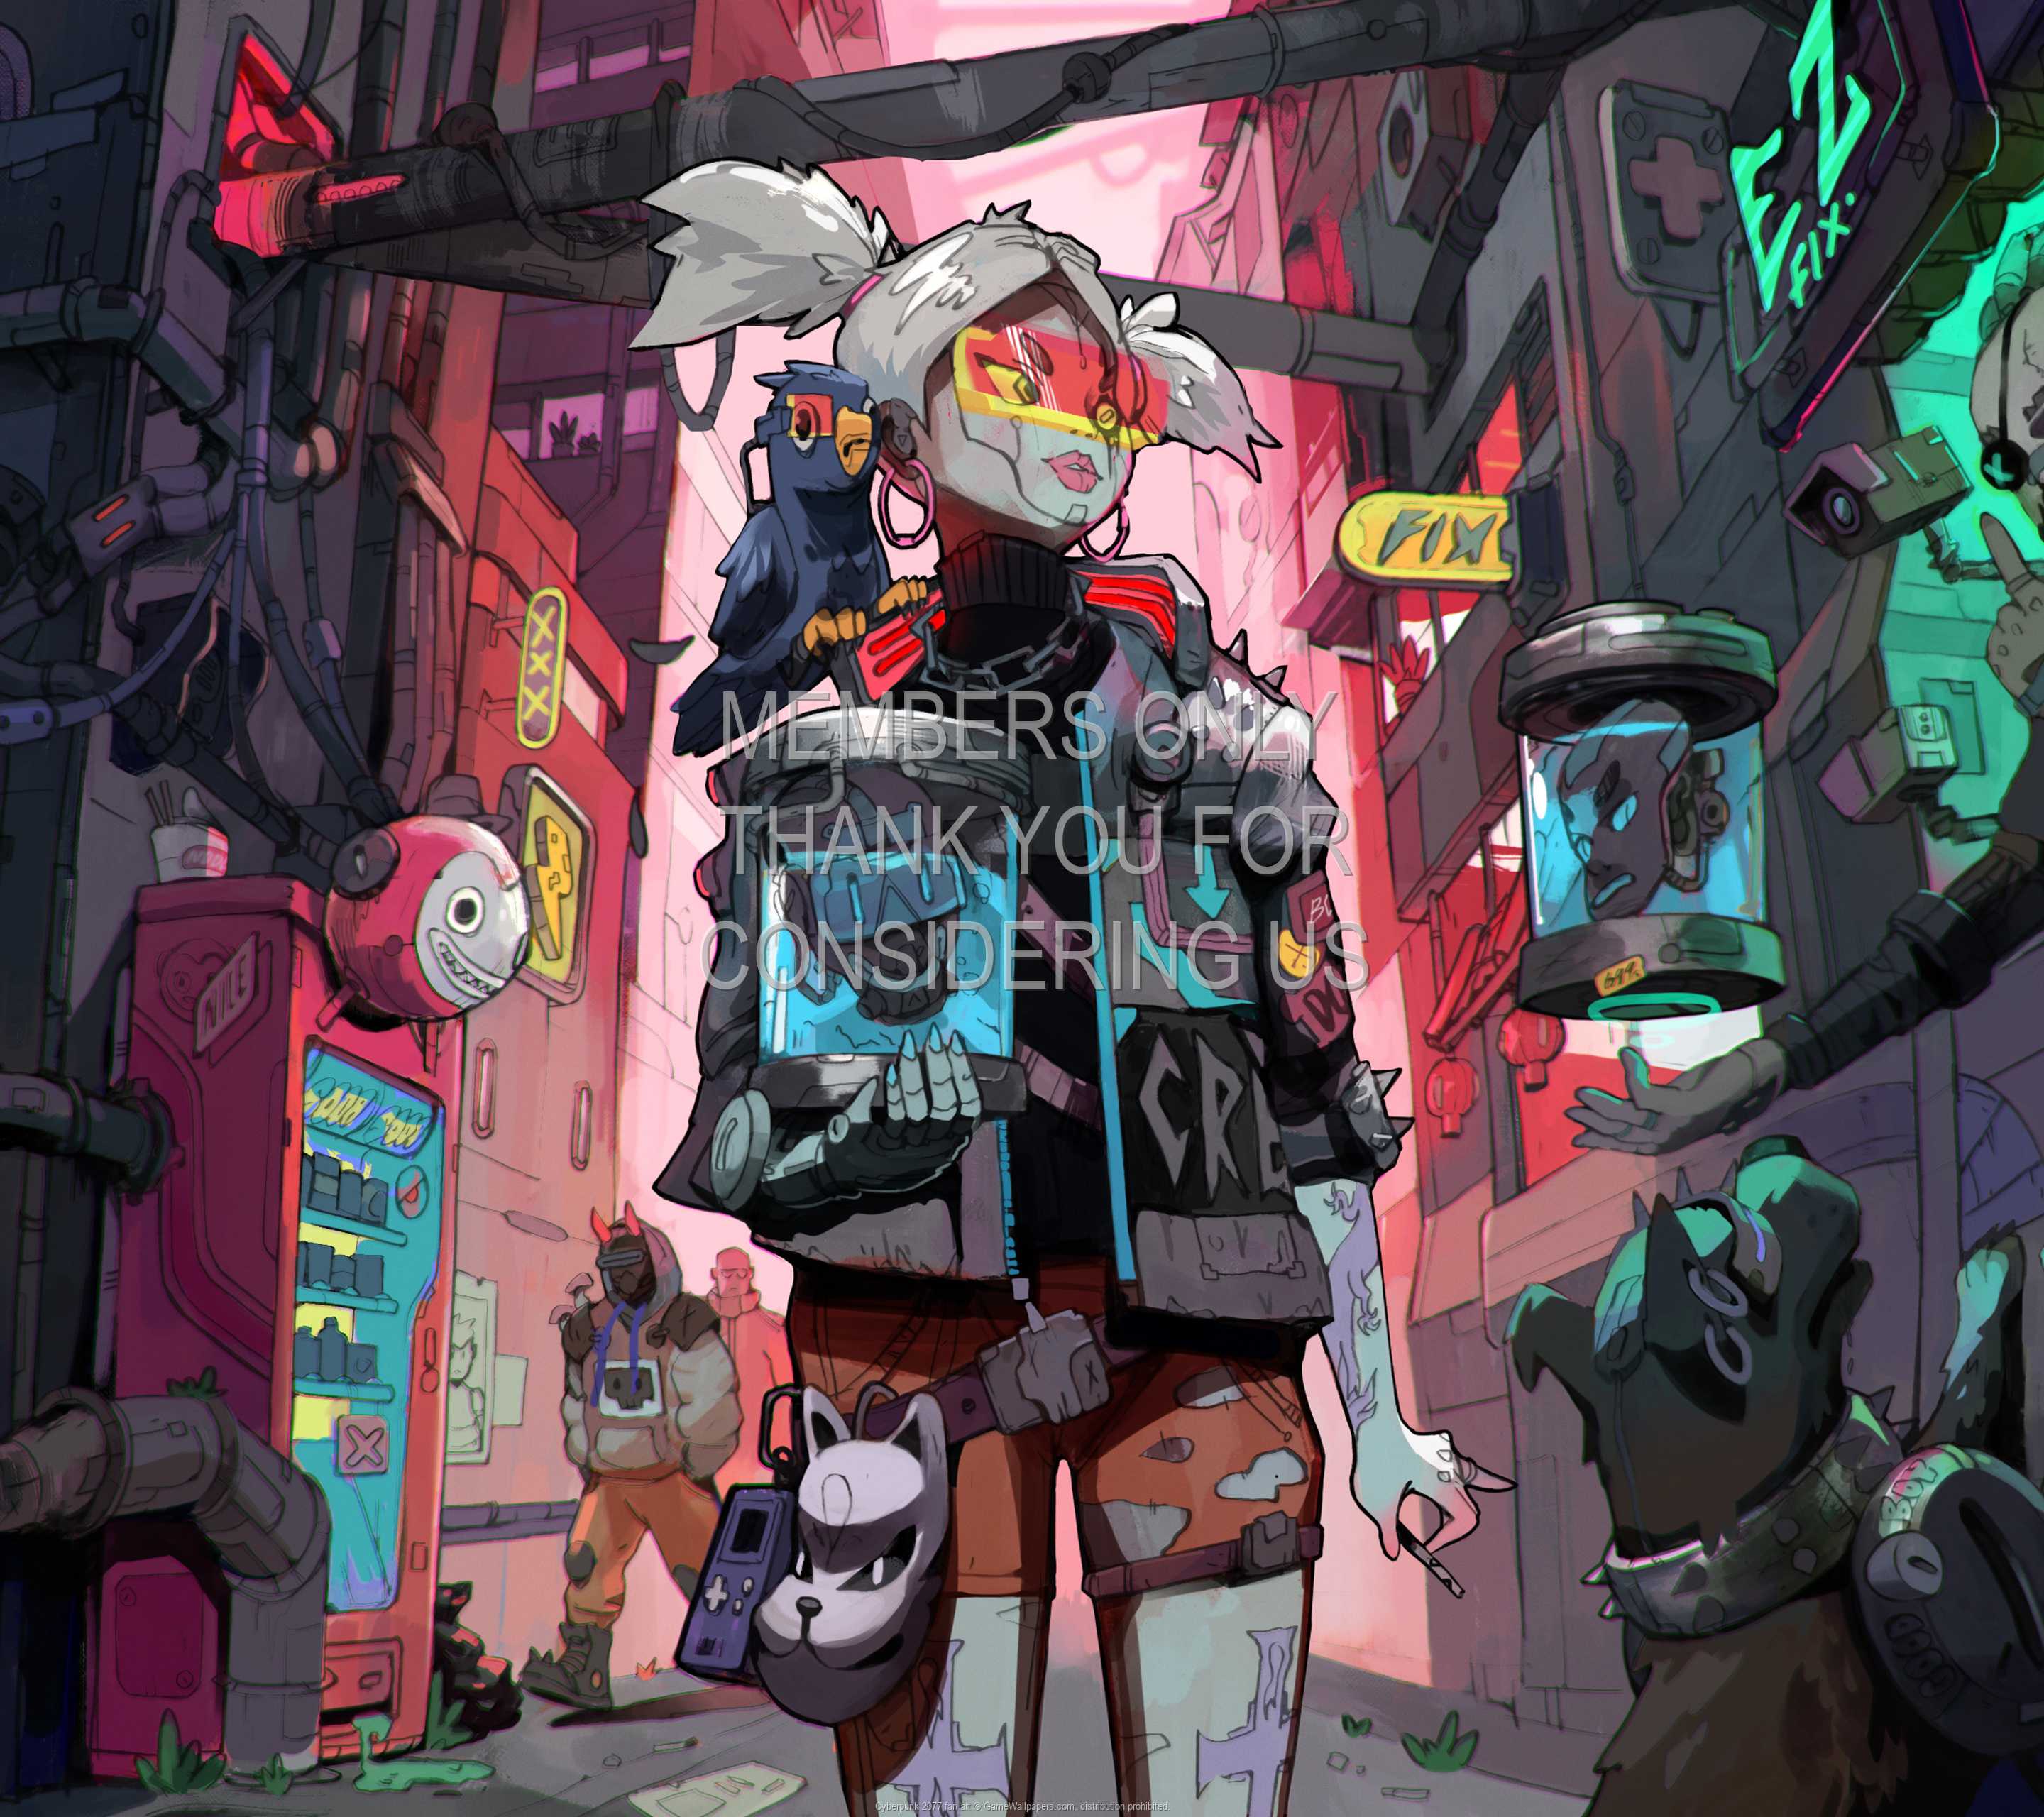 Cyberpunk 2077 fan art 1440p Horizontal Mobile wallpaper or background 06